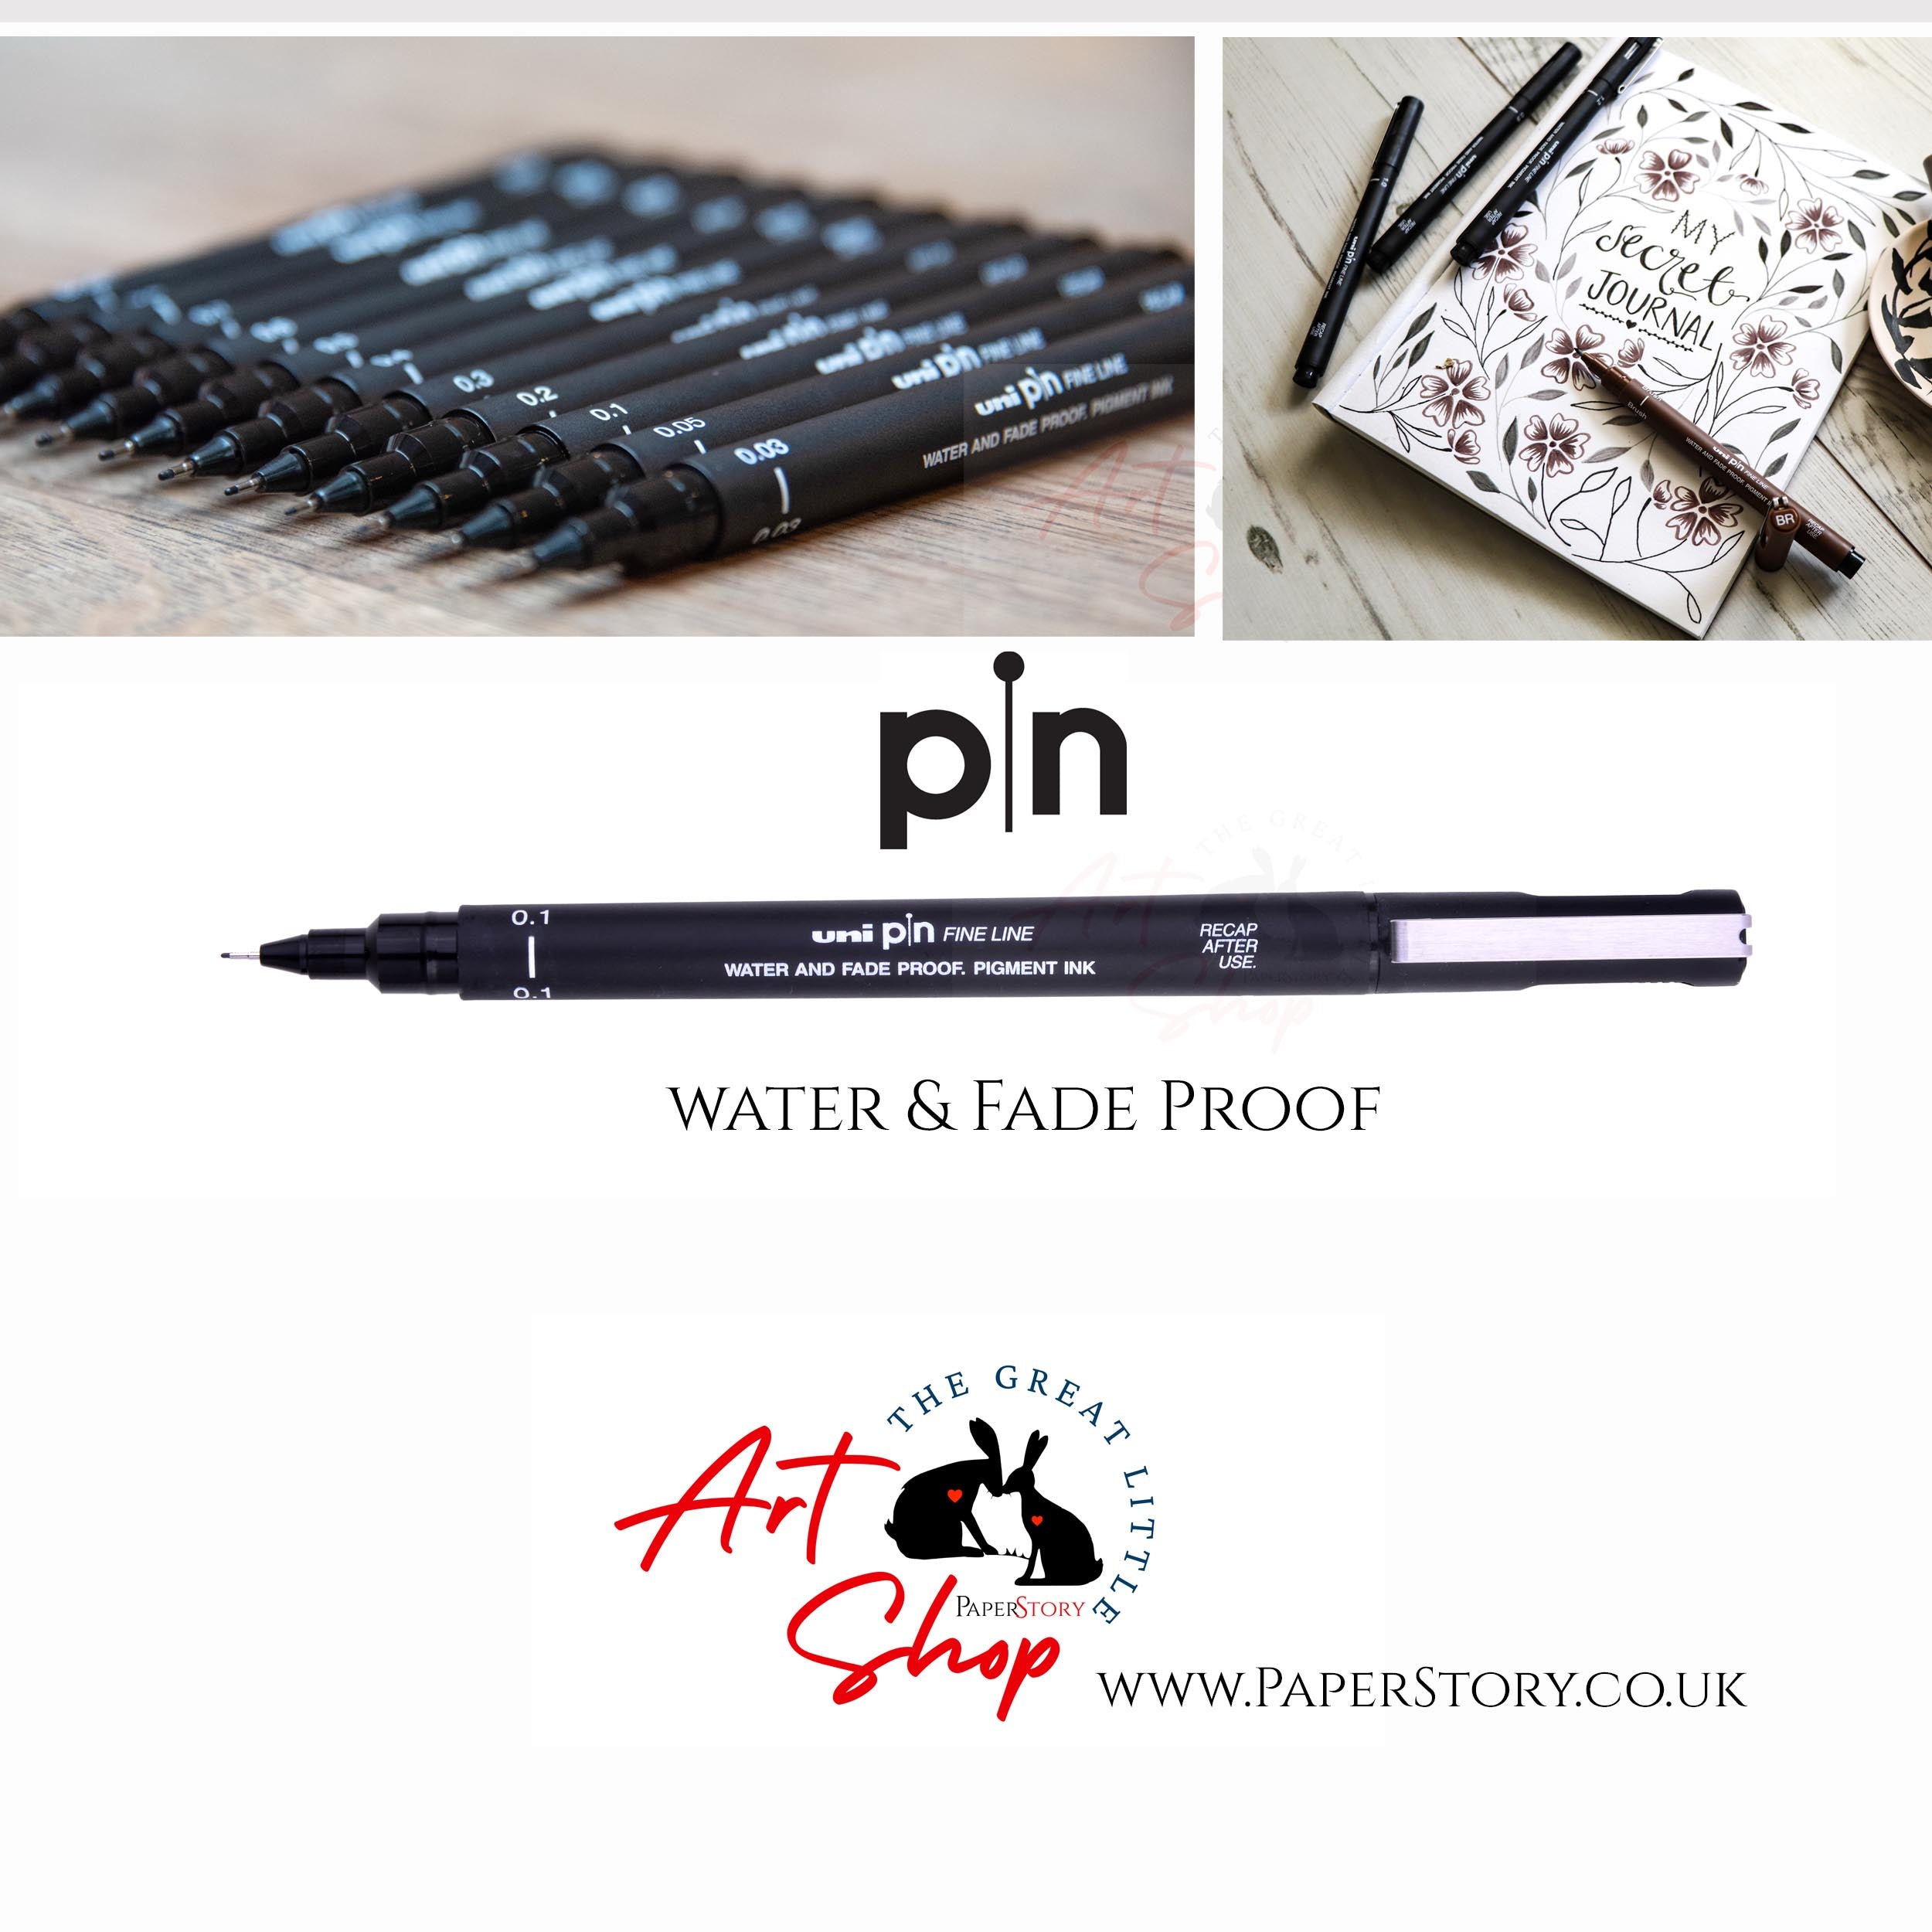 Uni Pin Fineliner Drawing Pen Black 0.03mm Pack of 3 